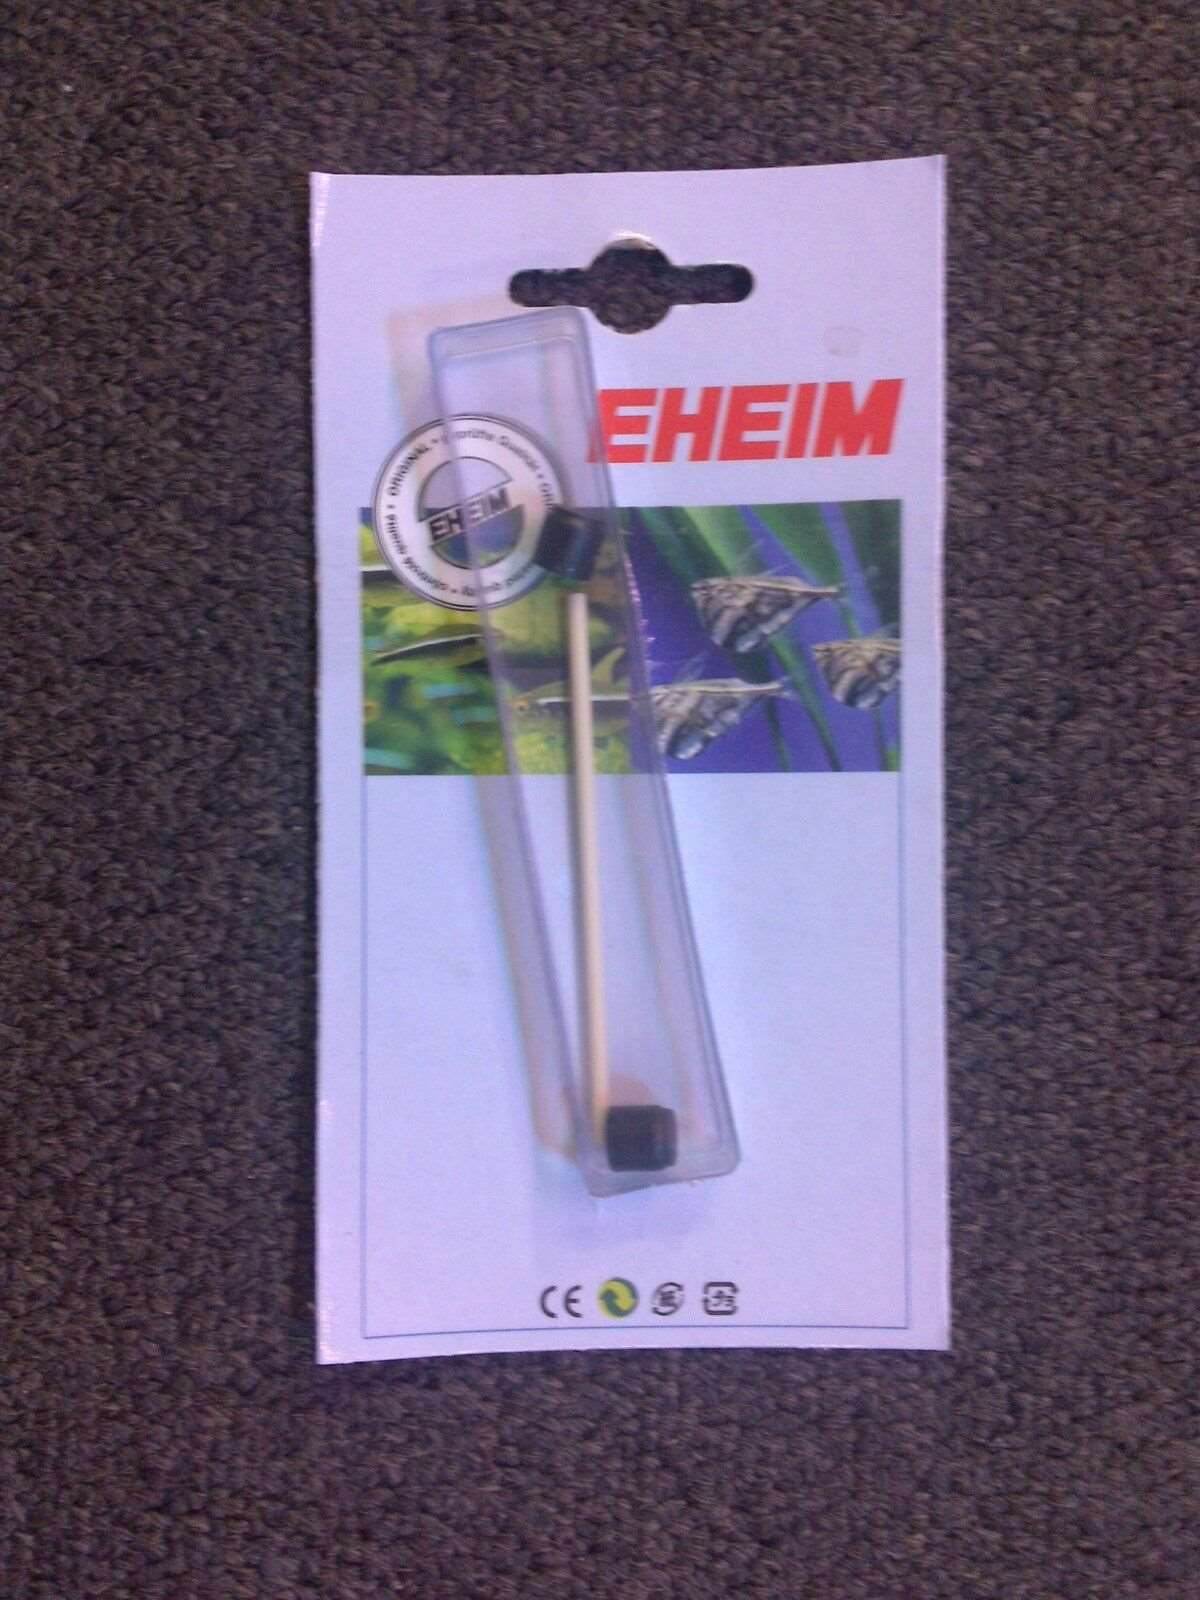 Eheim impeller shaft 7433720 to suit 1048, 2222 &amp; 2224 Eheim filters